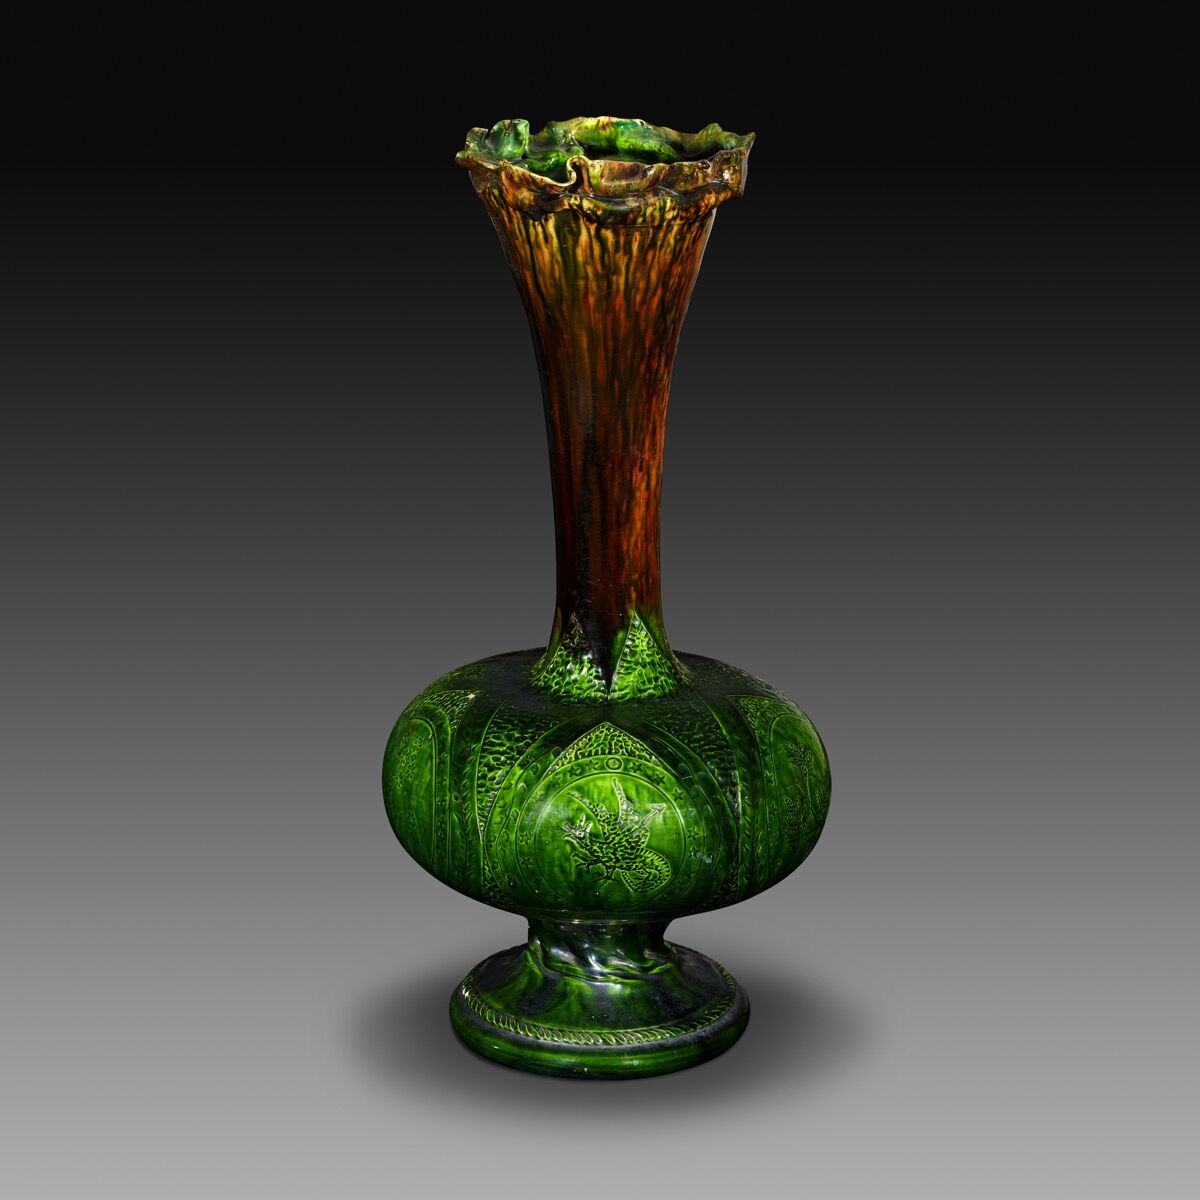 George Ohr The Eccentric Artist Who Pioneered American Ceramics Artsy